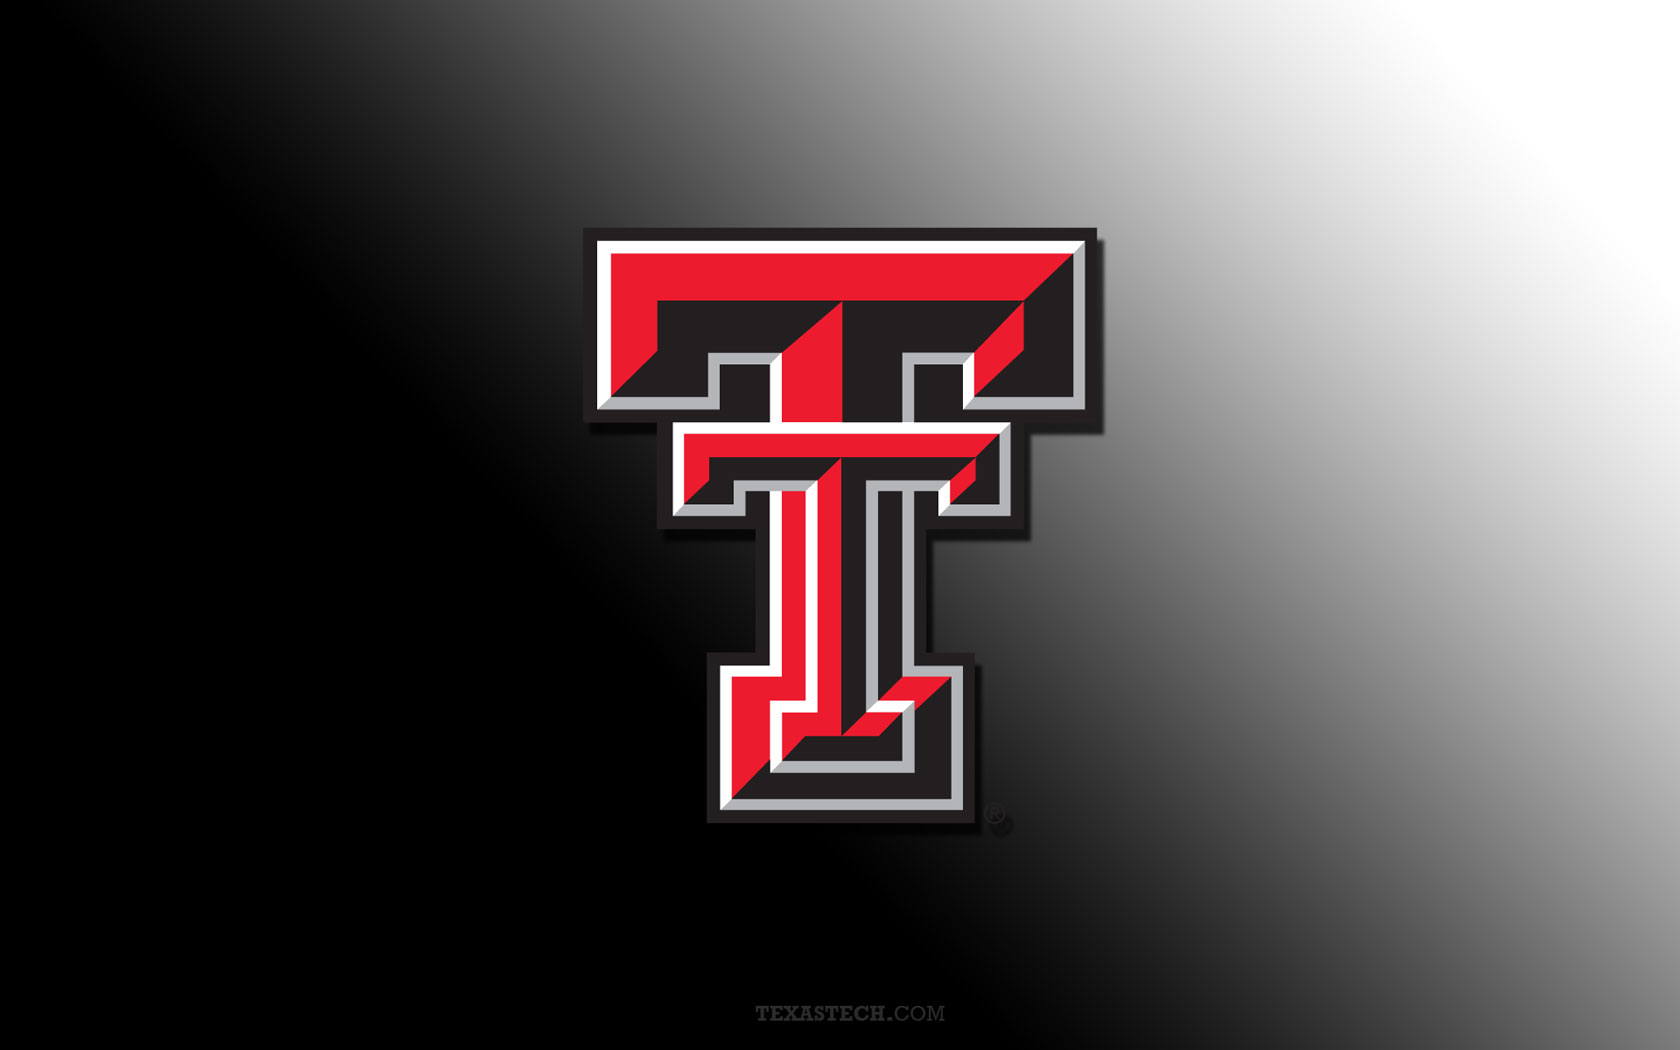 Texastech Texas Tech University Official Athletic Site